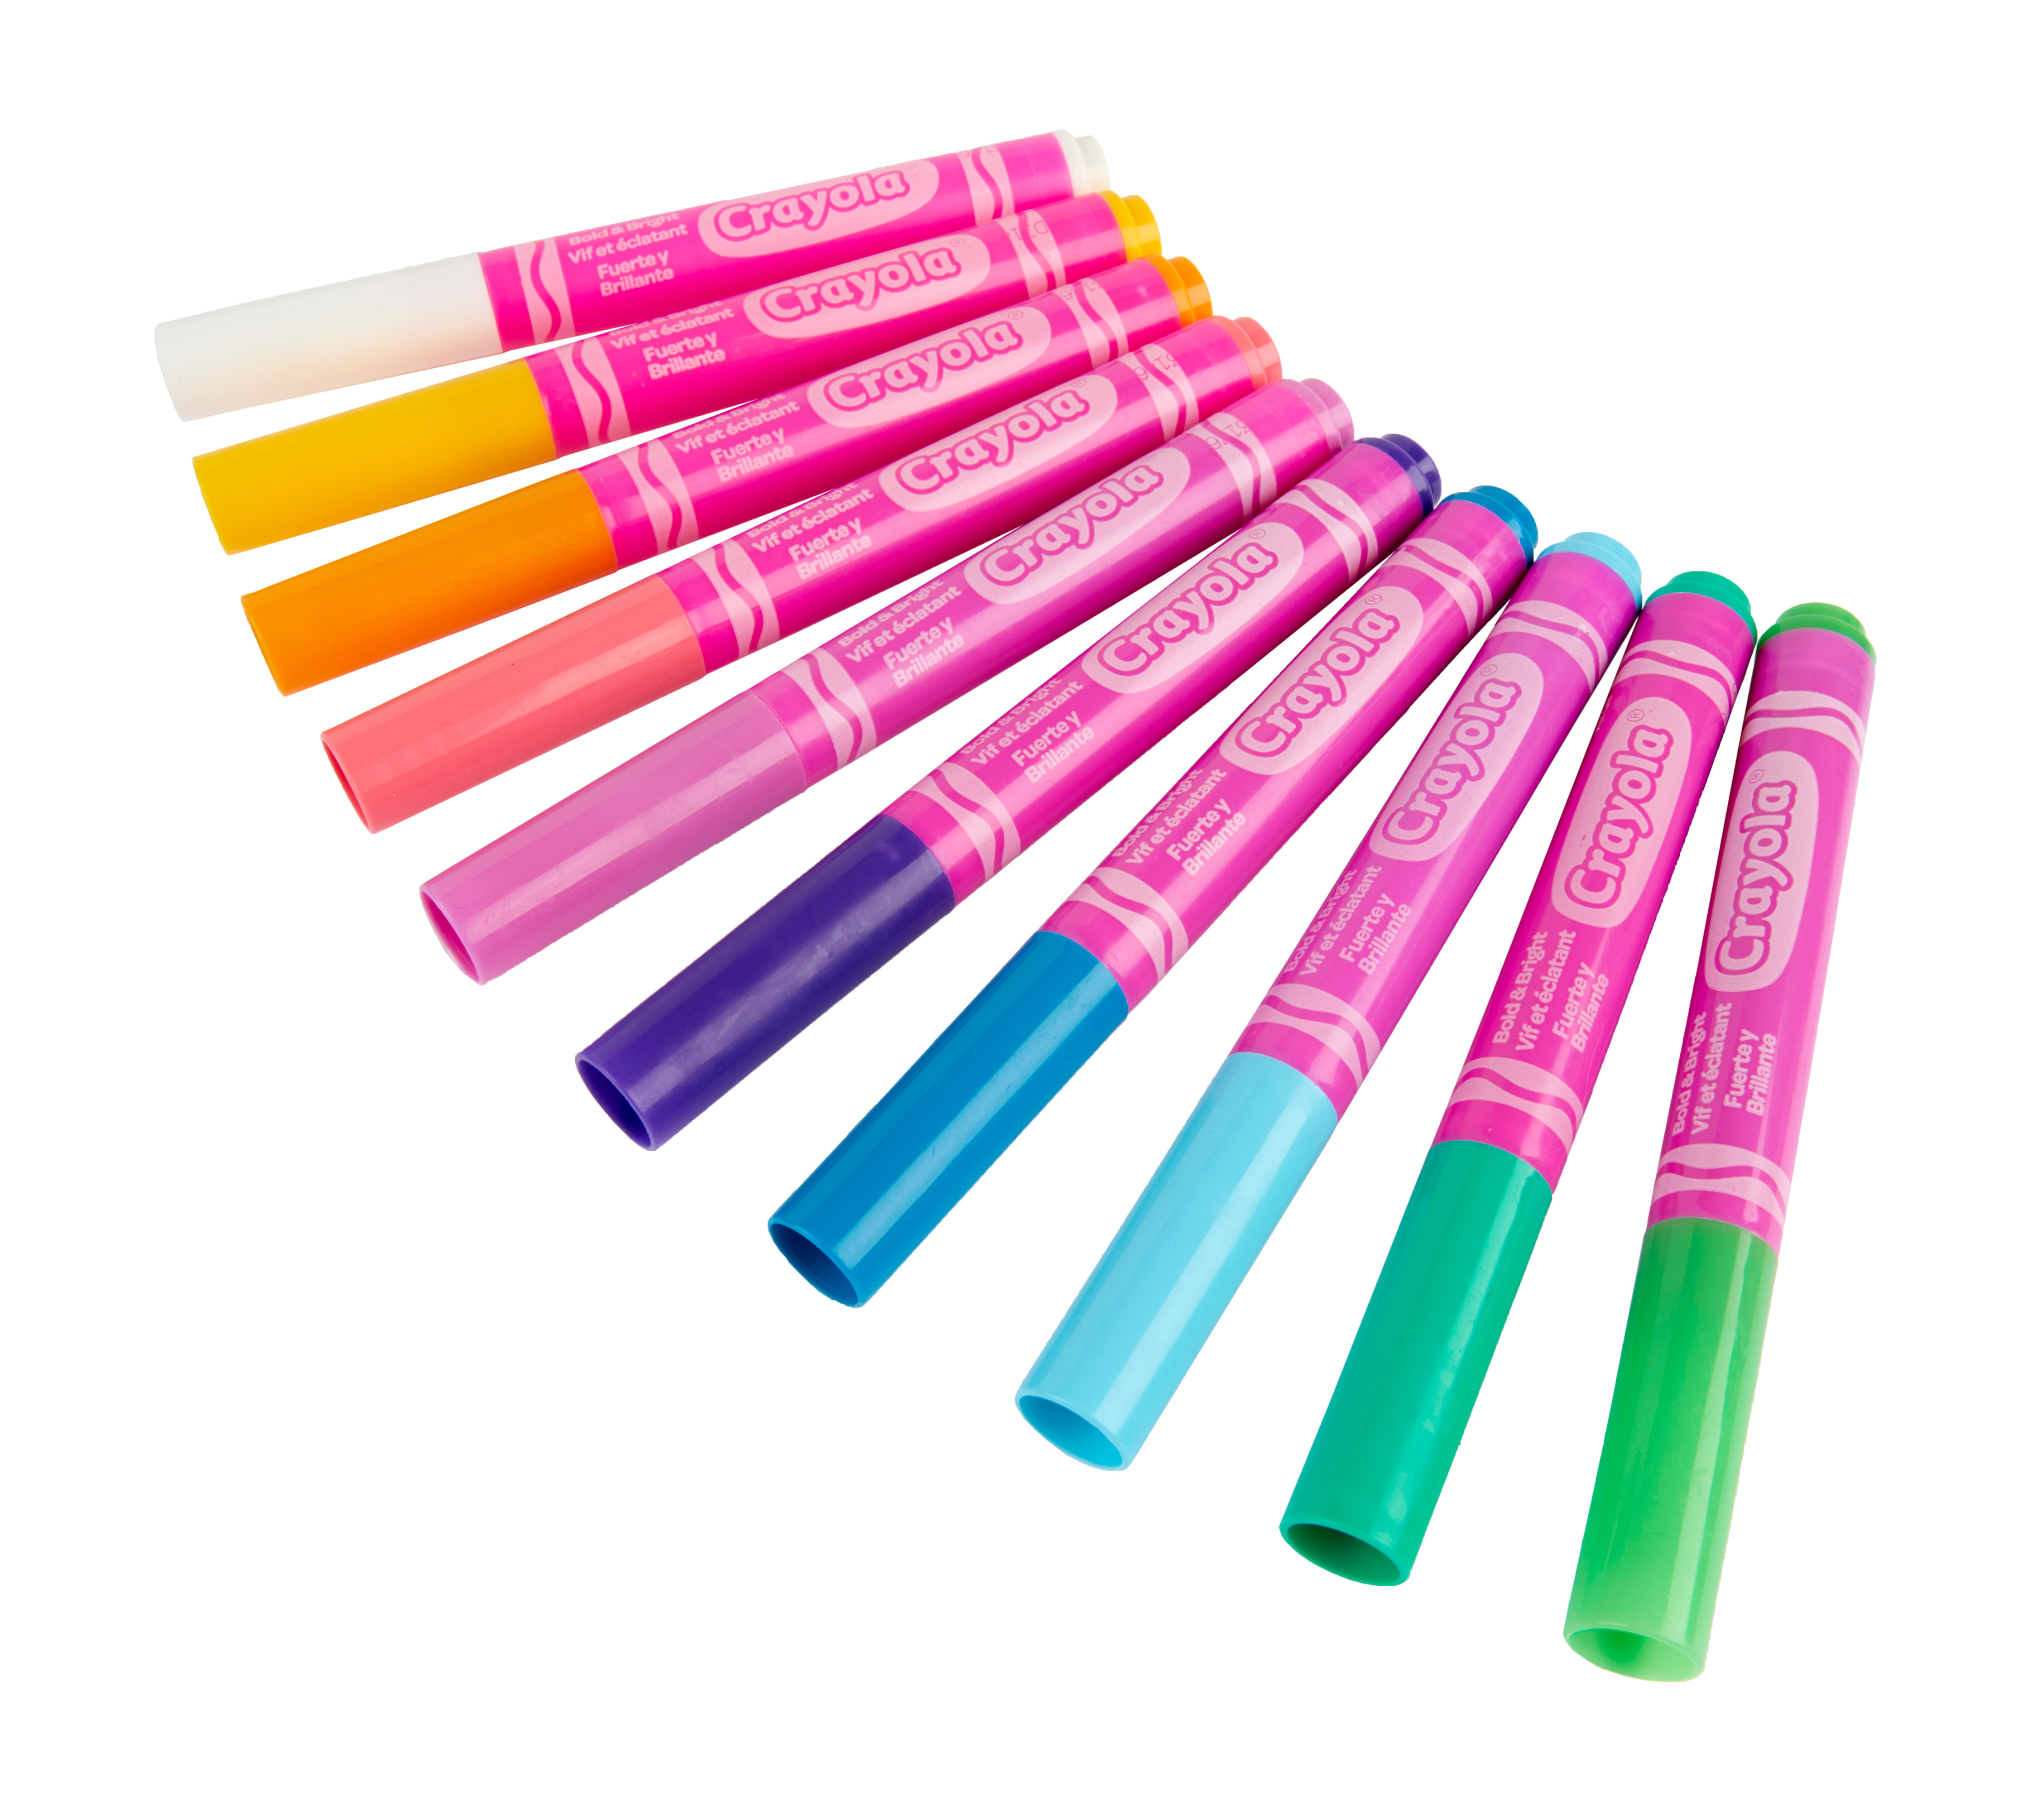 Crayola Bright/Bold Broad Line Markers